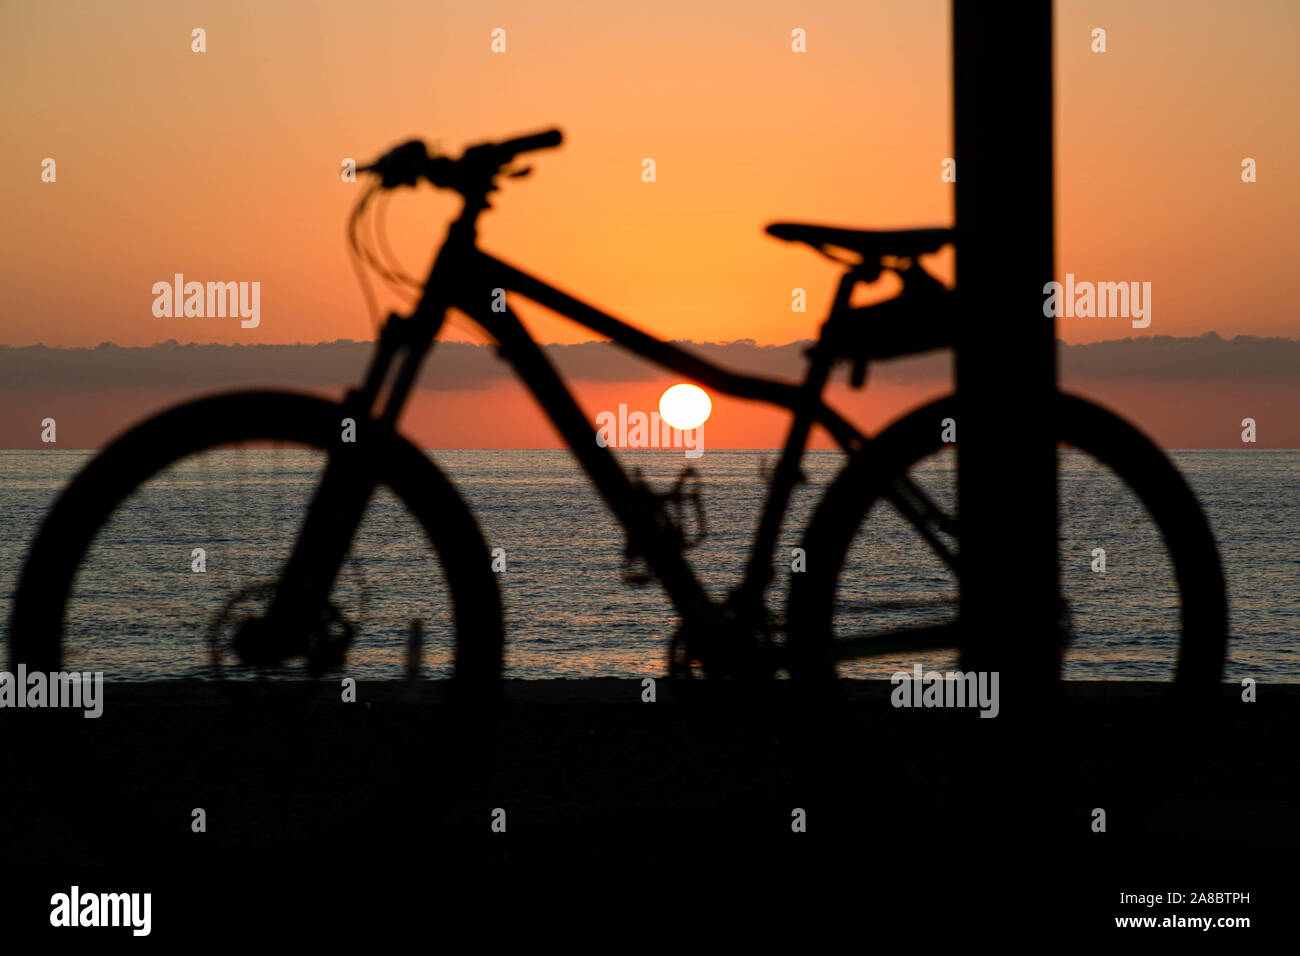 The Bike Down at The Beach at Sun Rise Stock Photo